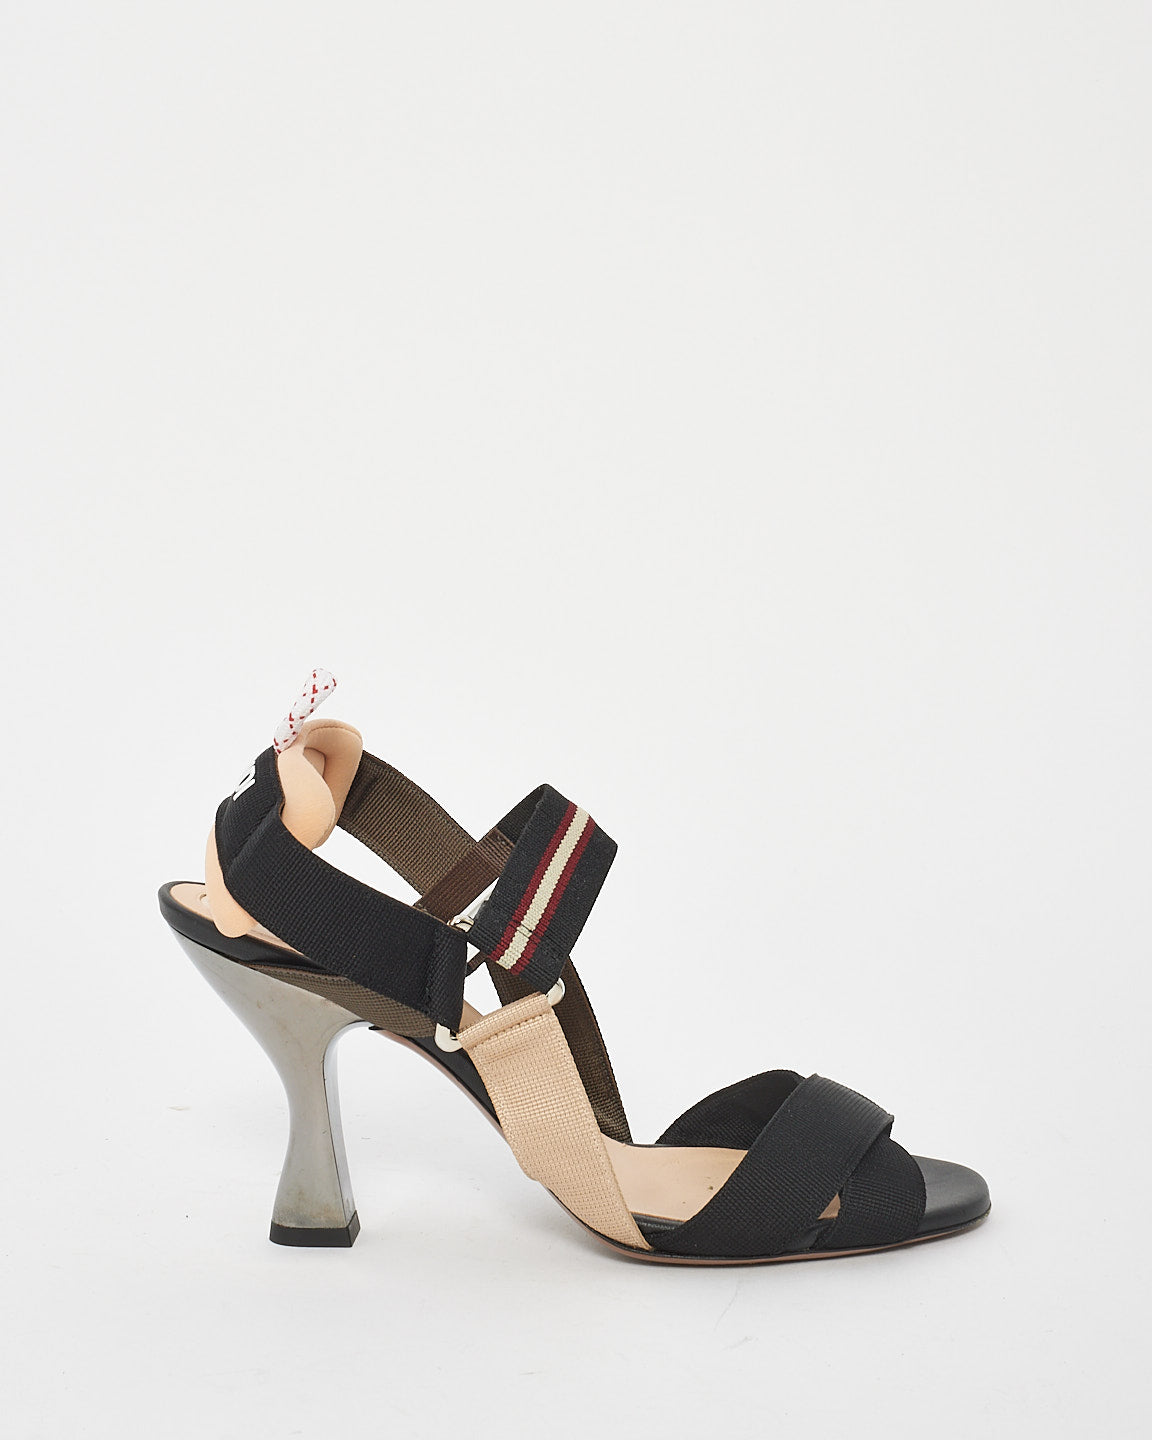 Fendi Black & Beige Fabric Colibri Strap Sandals - 39